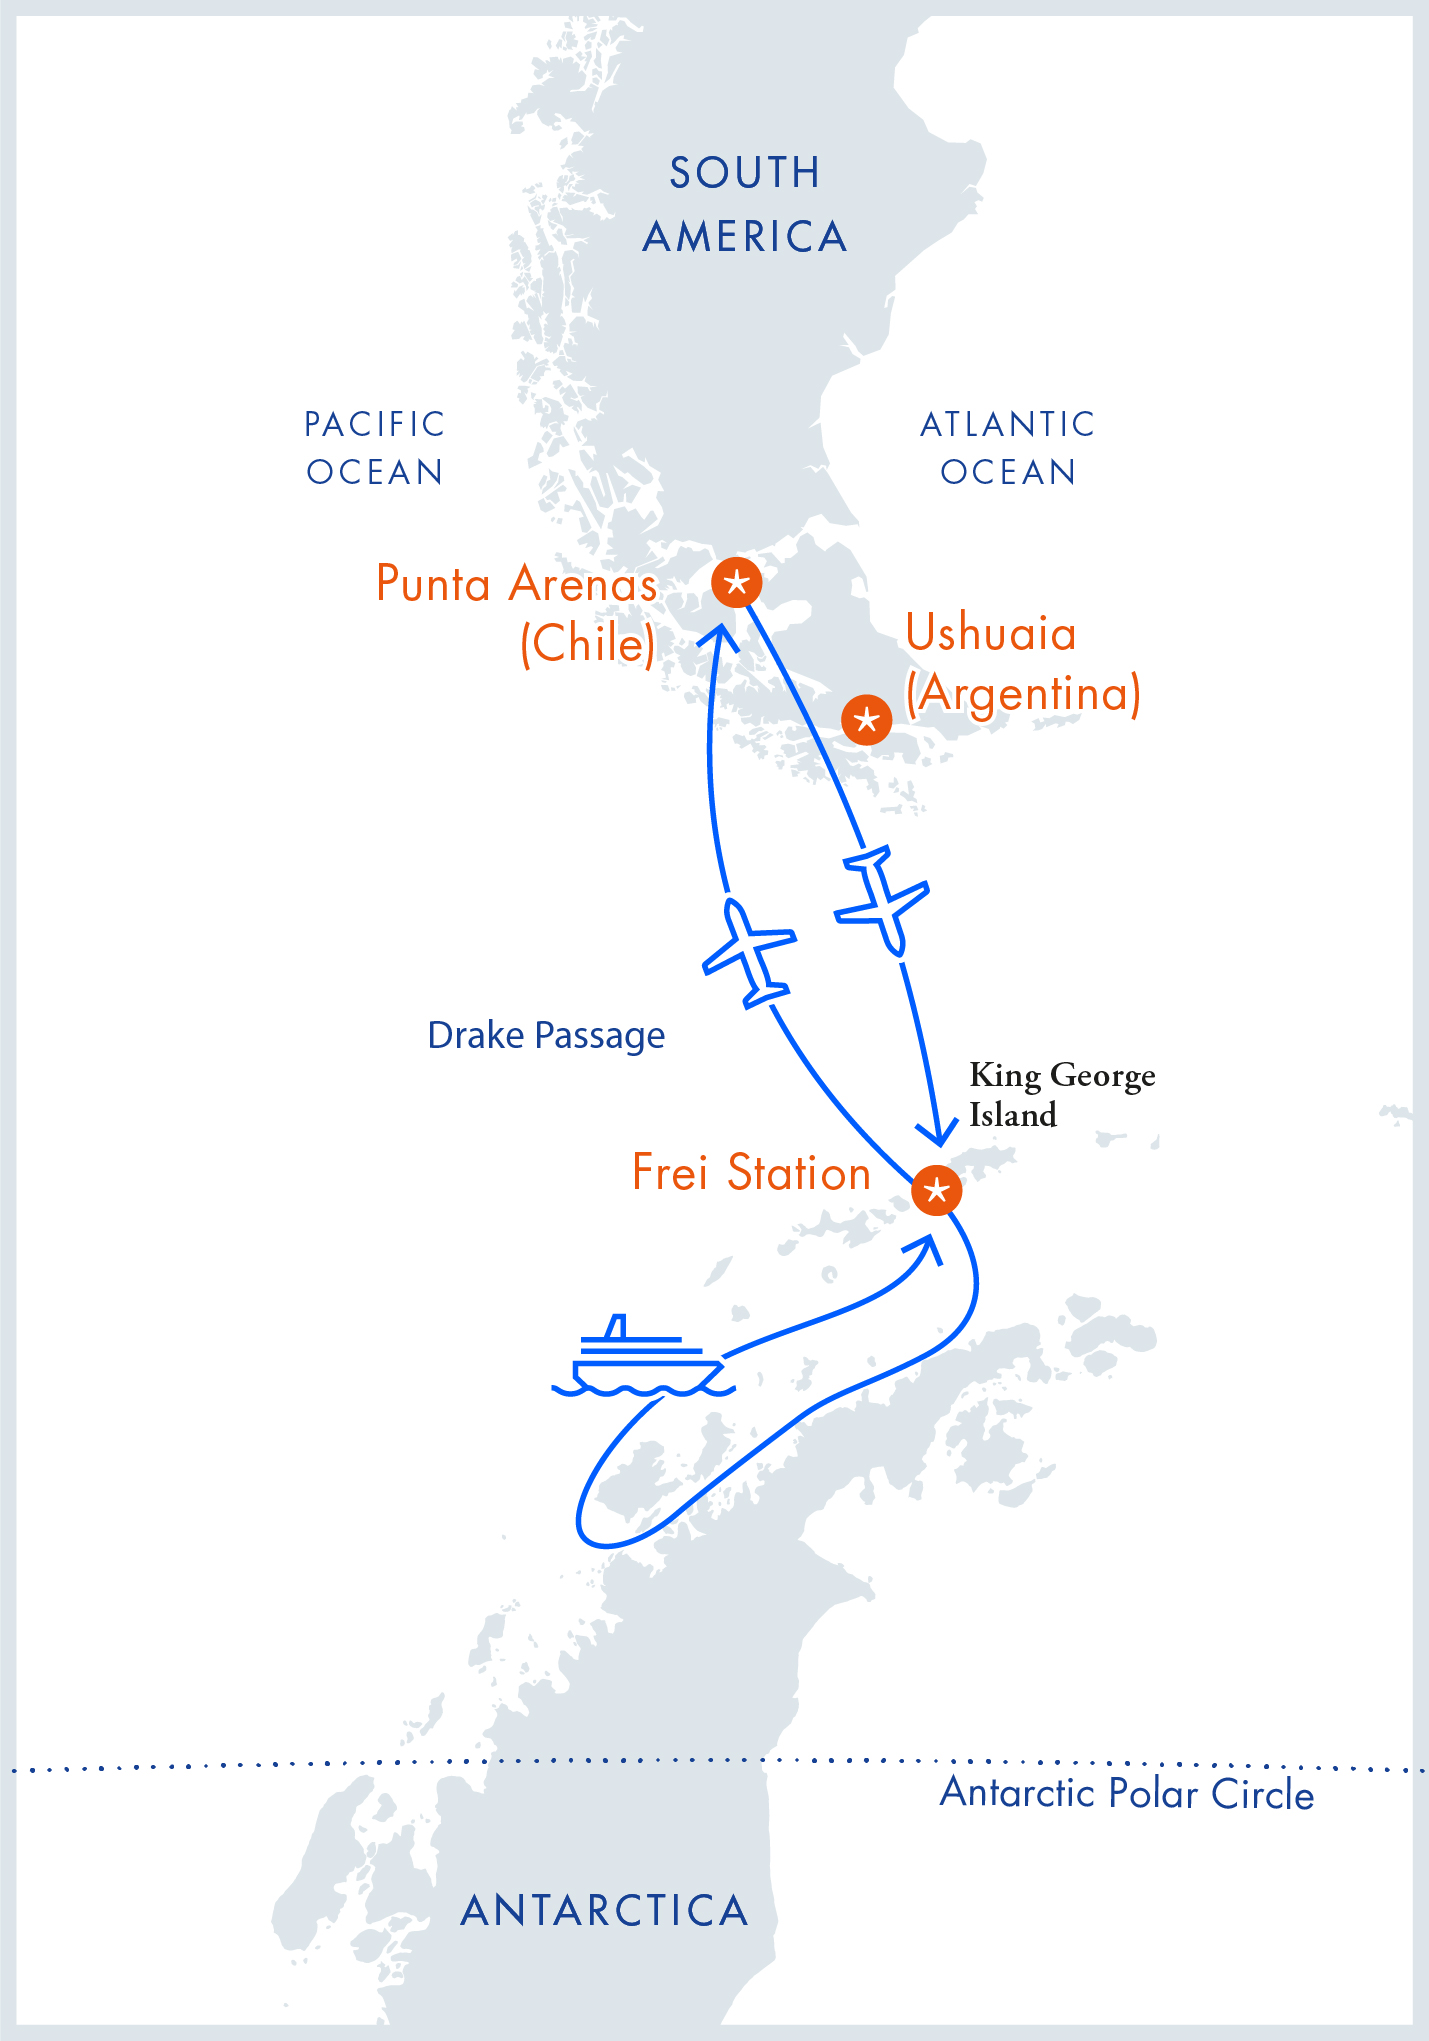 Маршрут тура «перелет + круиз». Источник: antarctica21.com